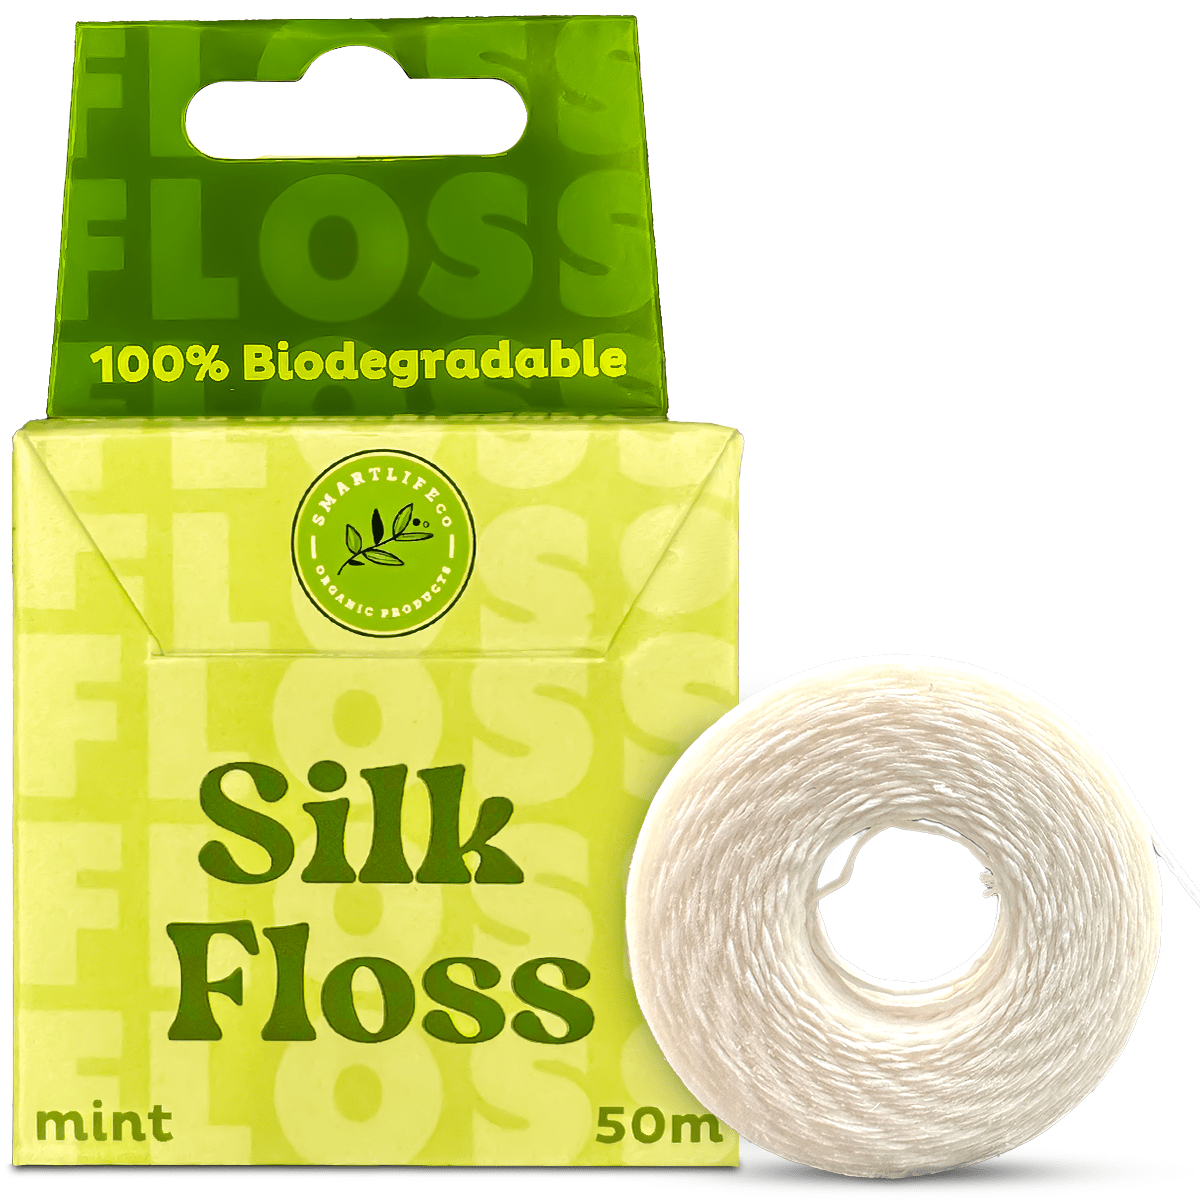 Vegan Silk Dental Floss, var_mint